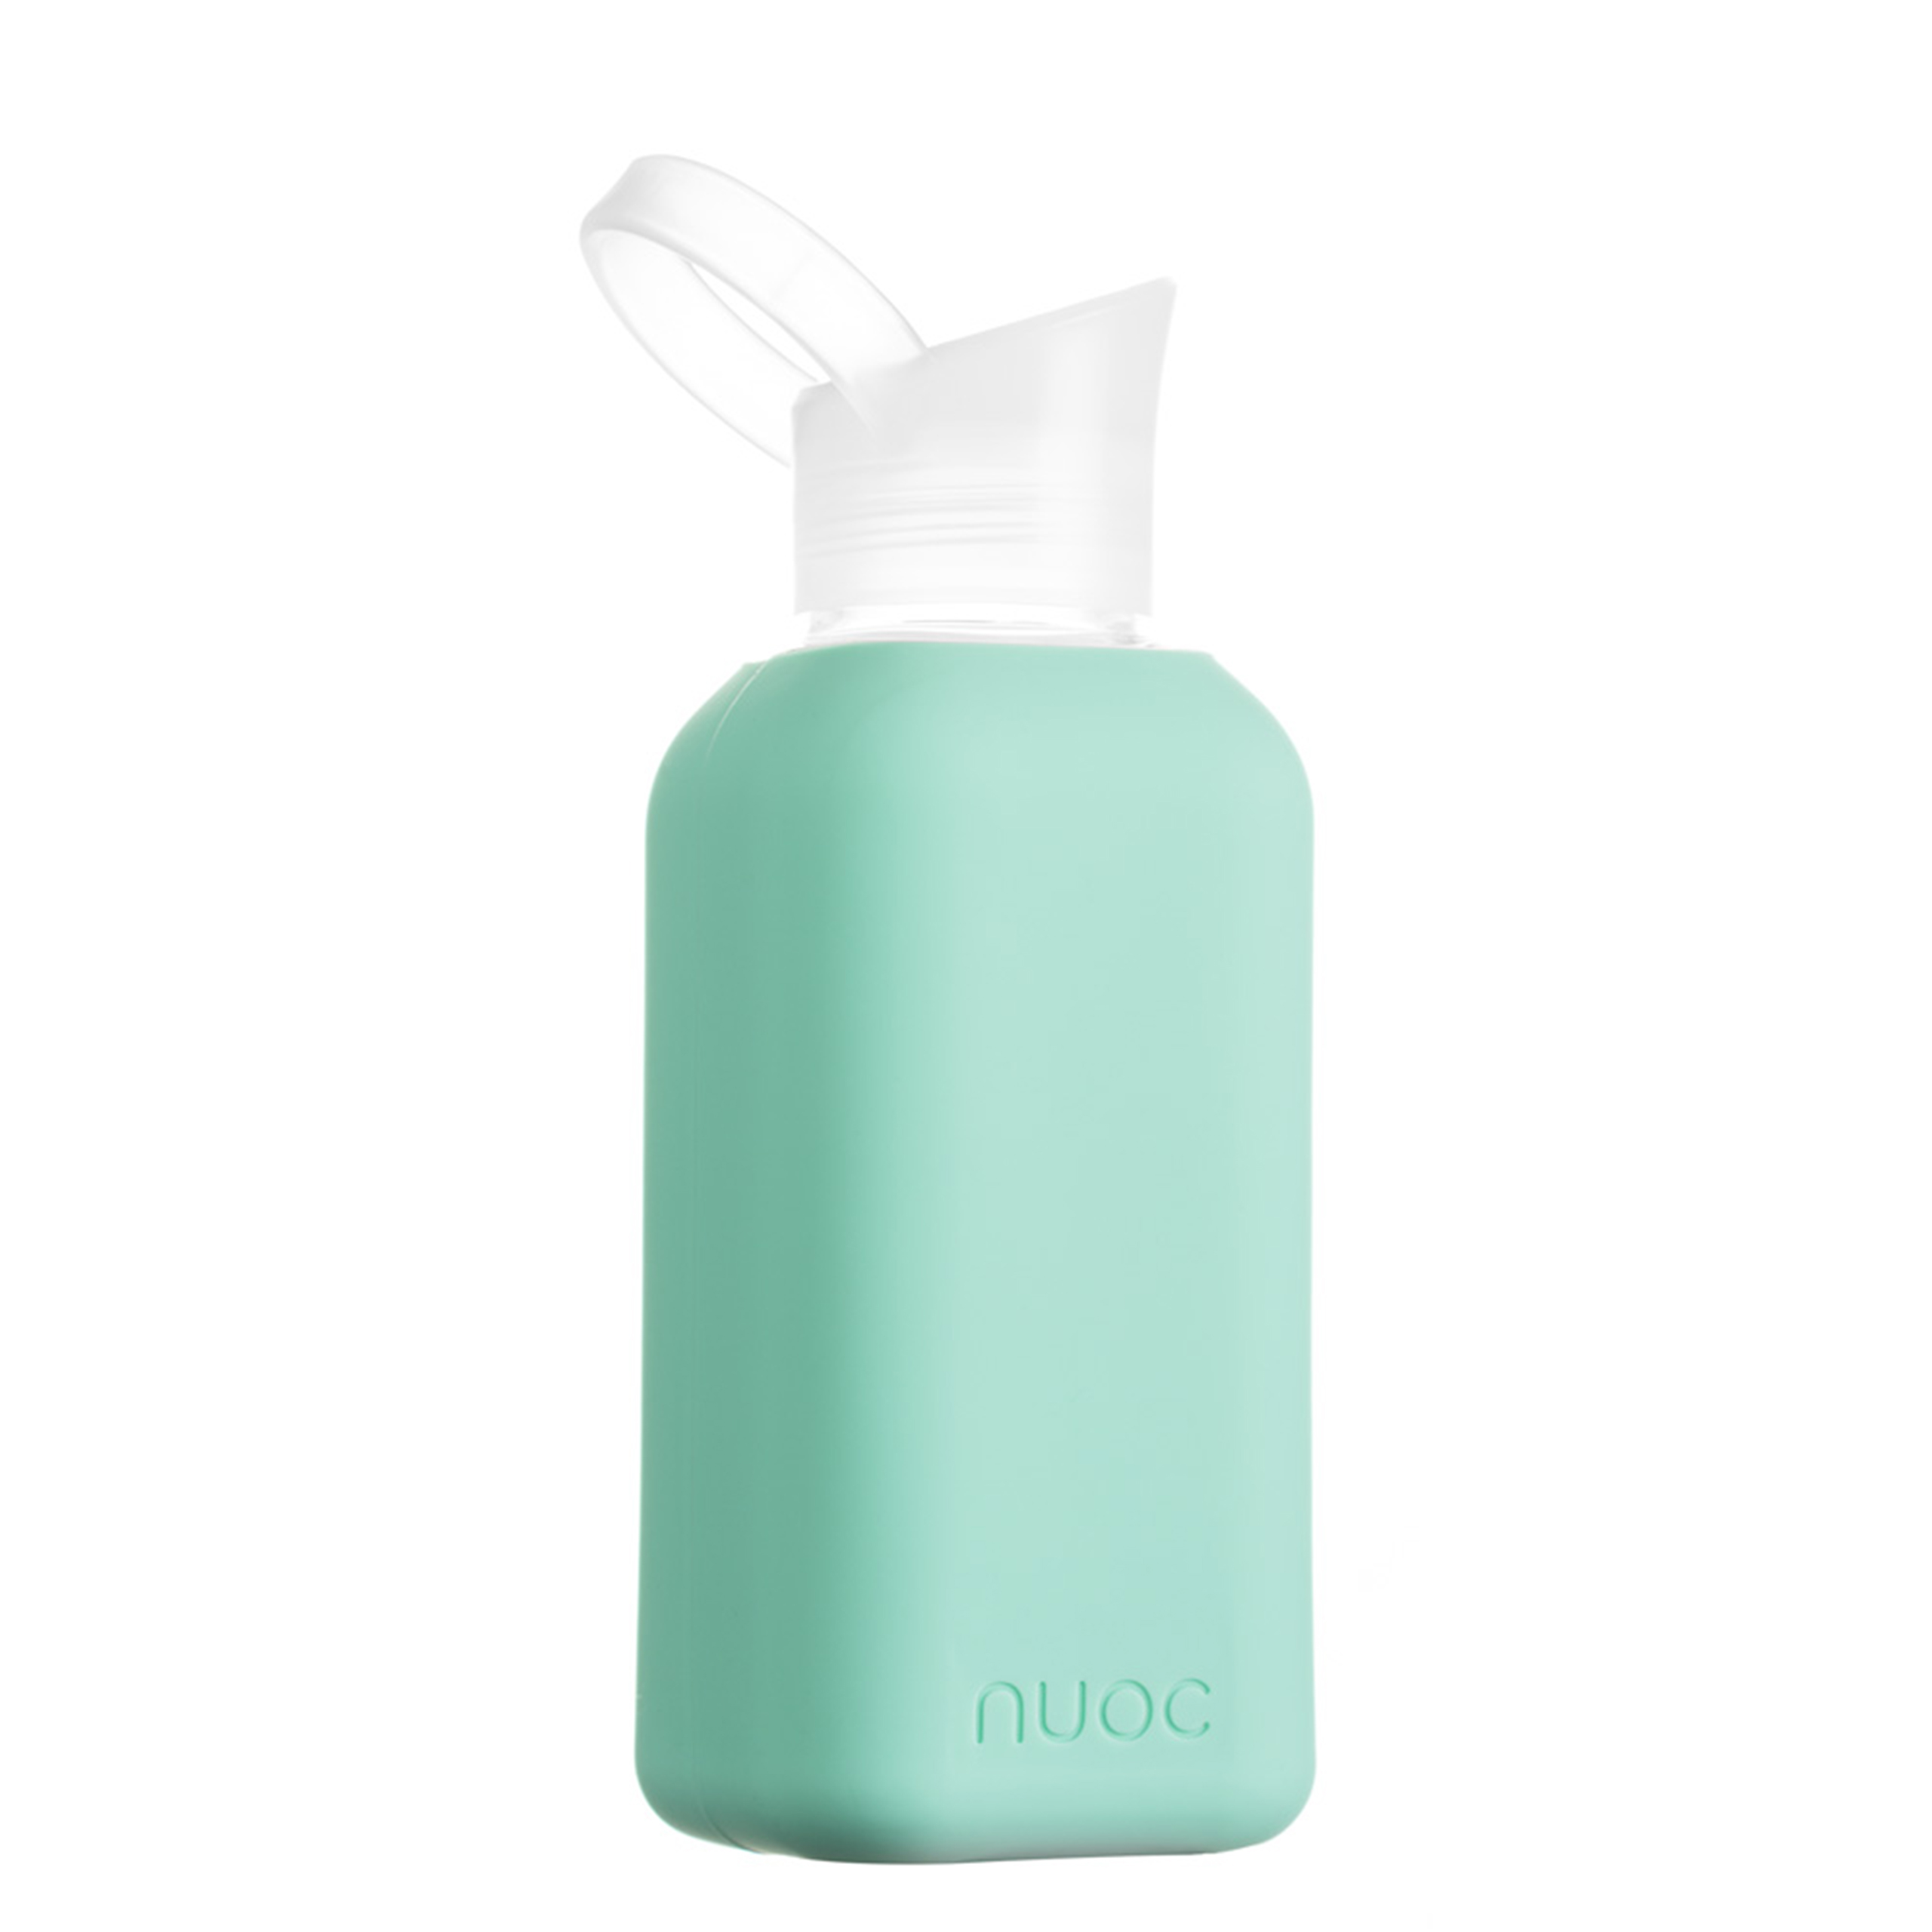 NUOC Arima - Drikkeflaske i glass fra NUOC - Mint